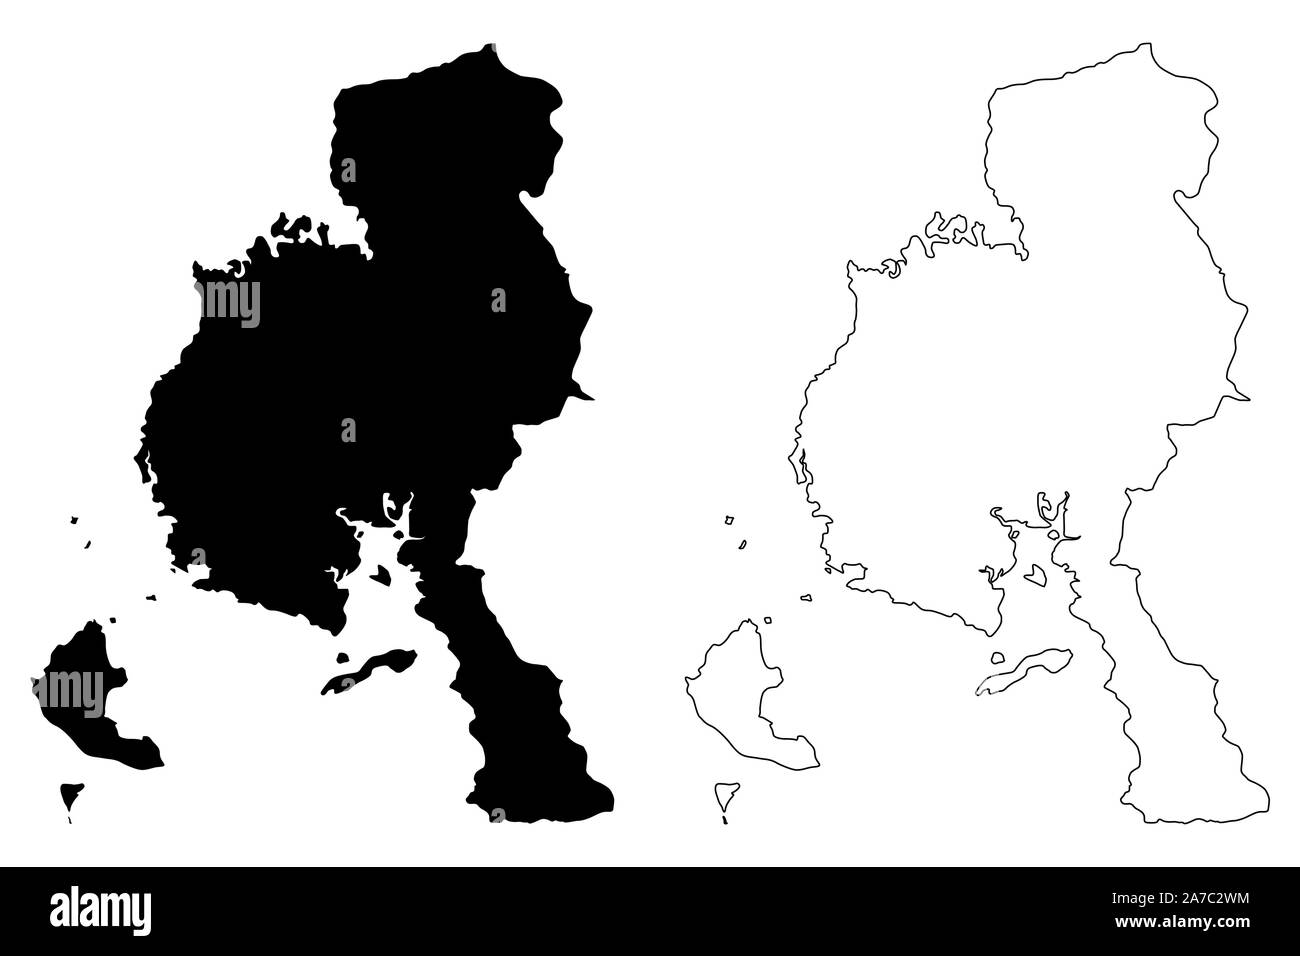 Provinz Veraguas (Republik Panama, Provinzen Panama) Karte Vektor-illustration, kritzeln Skizze Veraguas Karte Stock Vektor